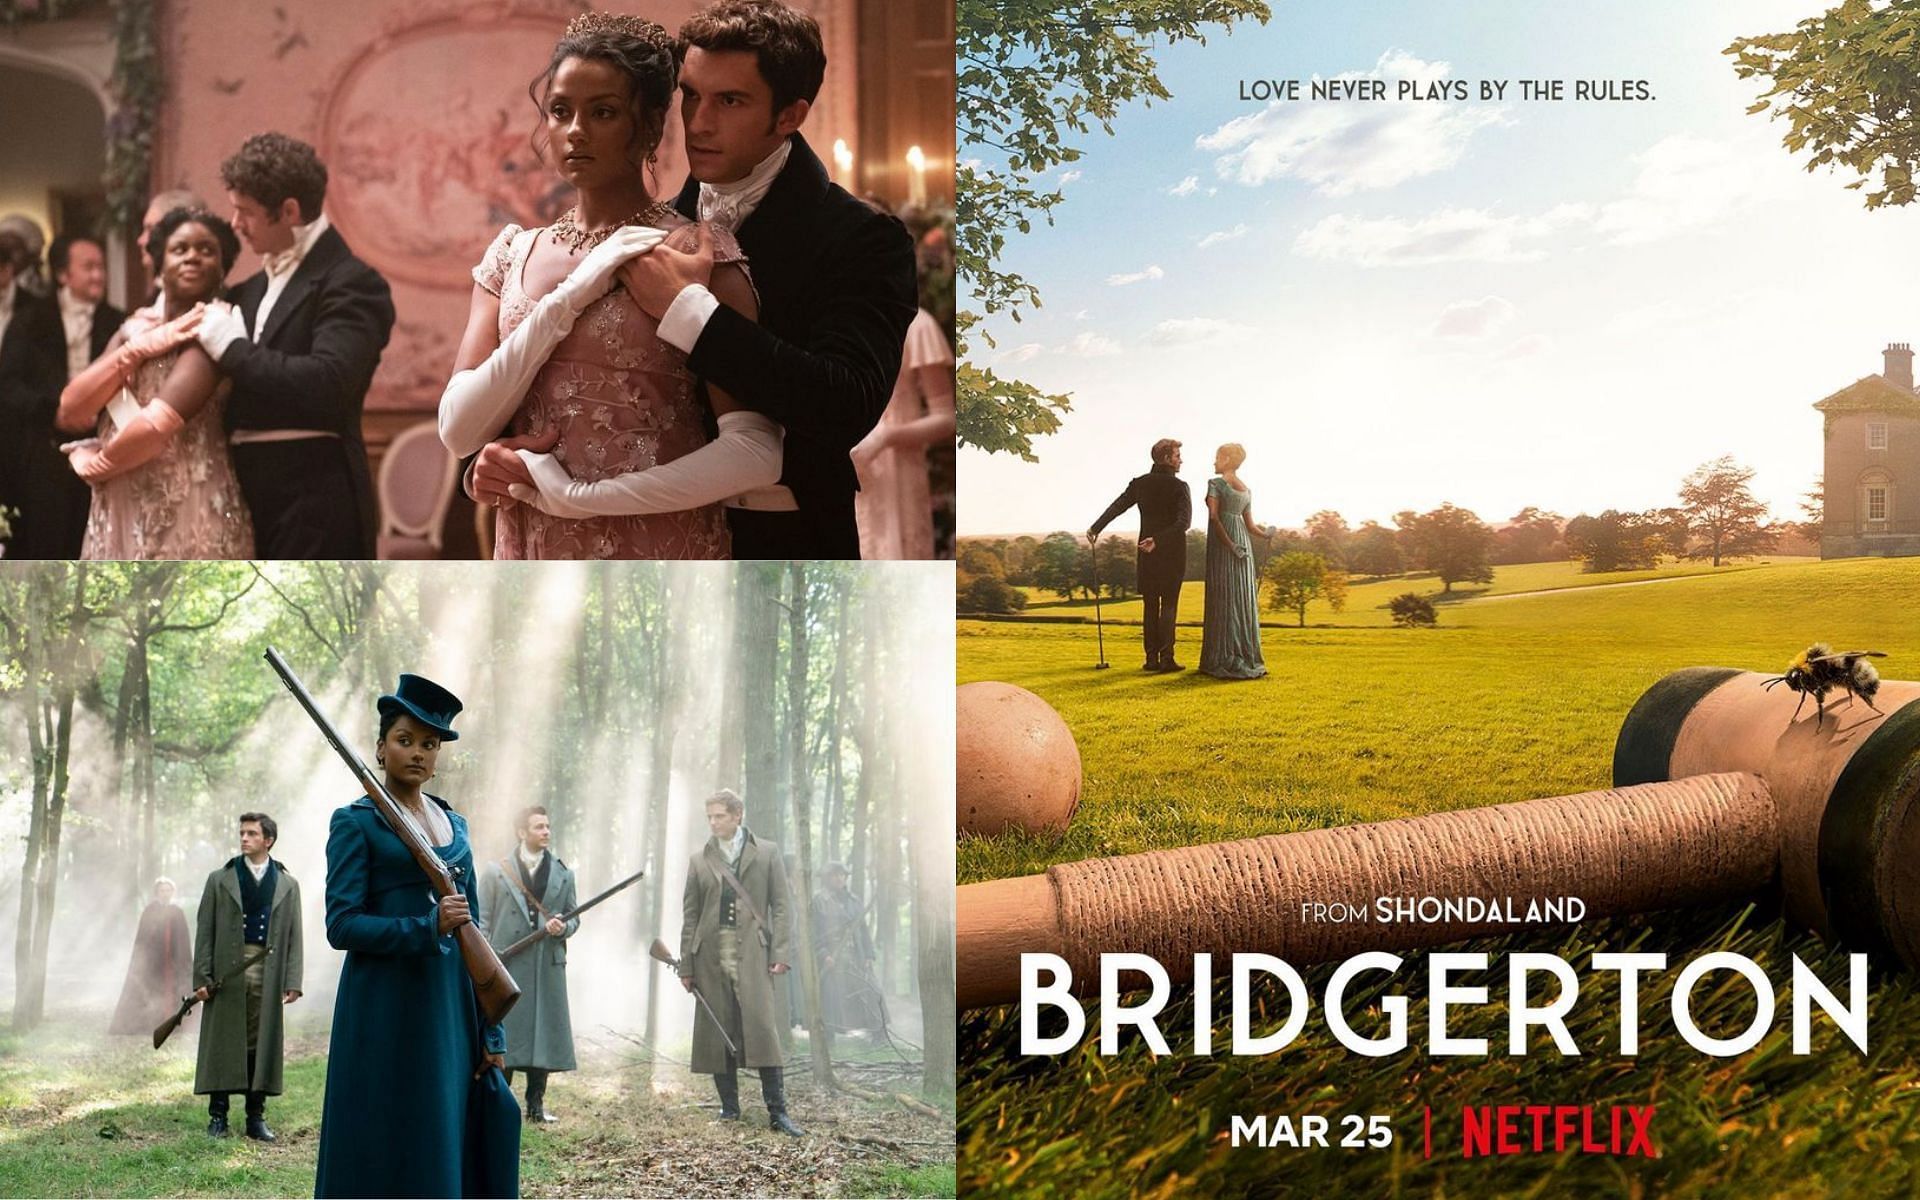 Bridgerton season 2 set to premiere on March 25 on Netflix (Image via @bridgertonnetflix/Instagram)